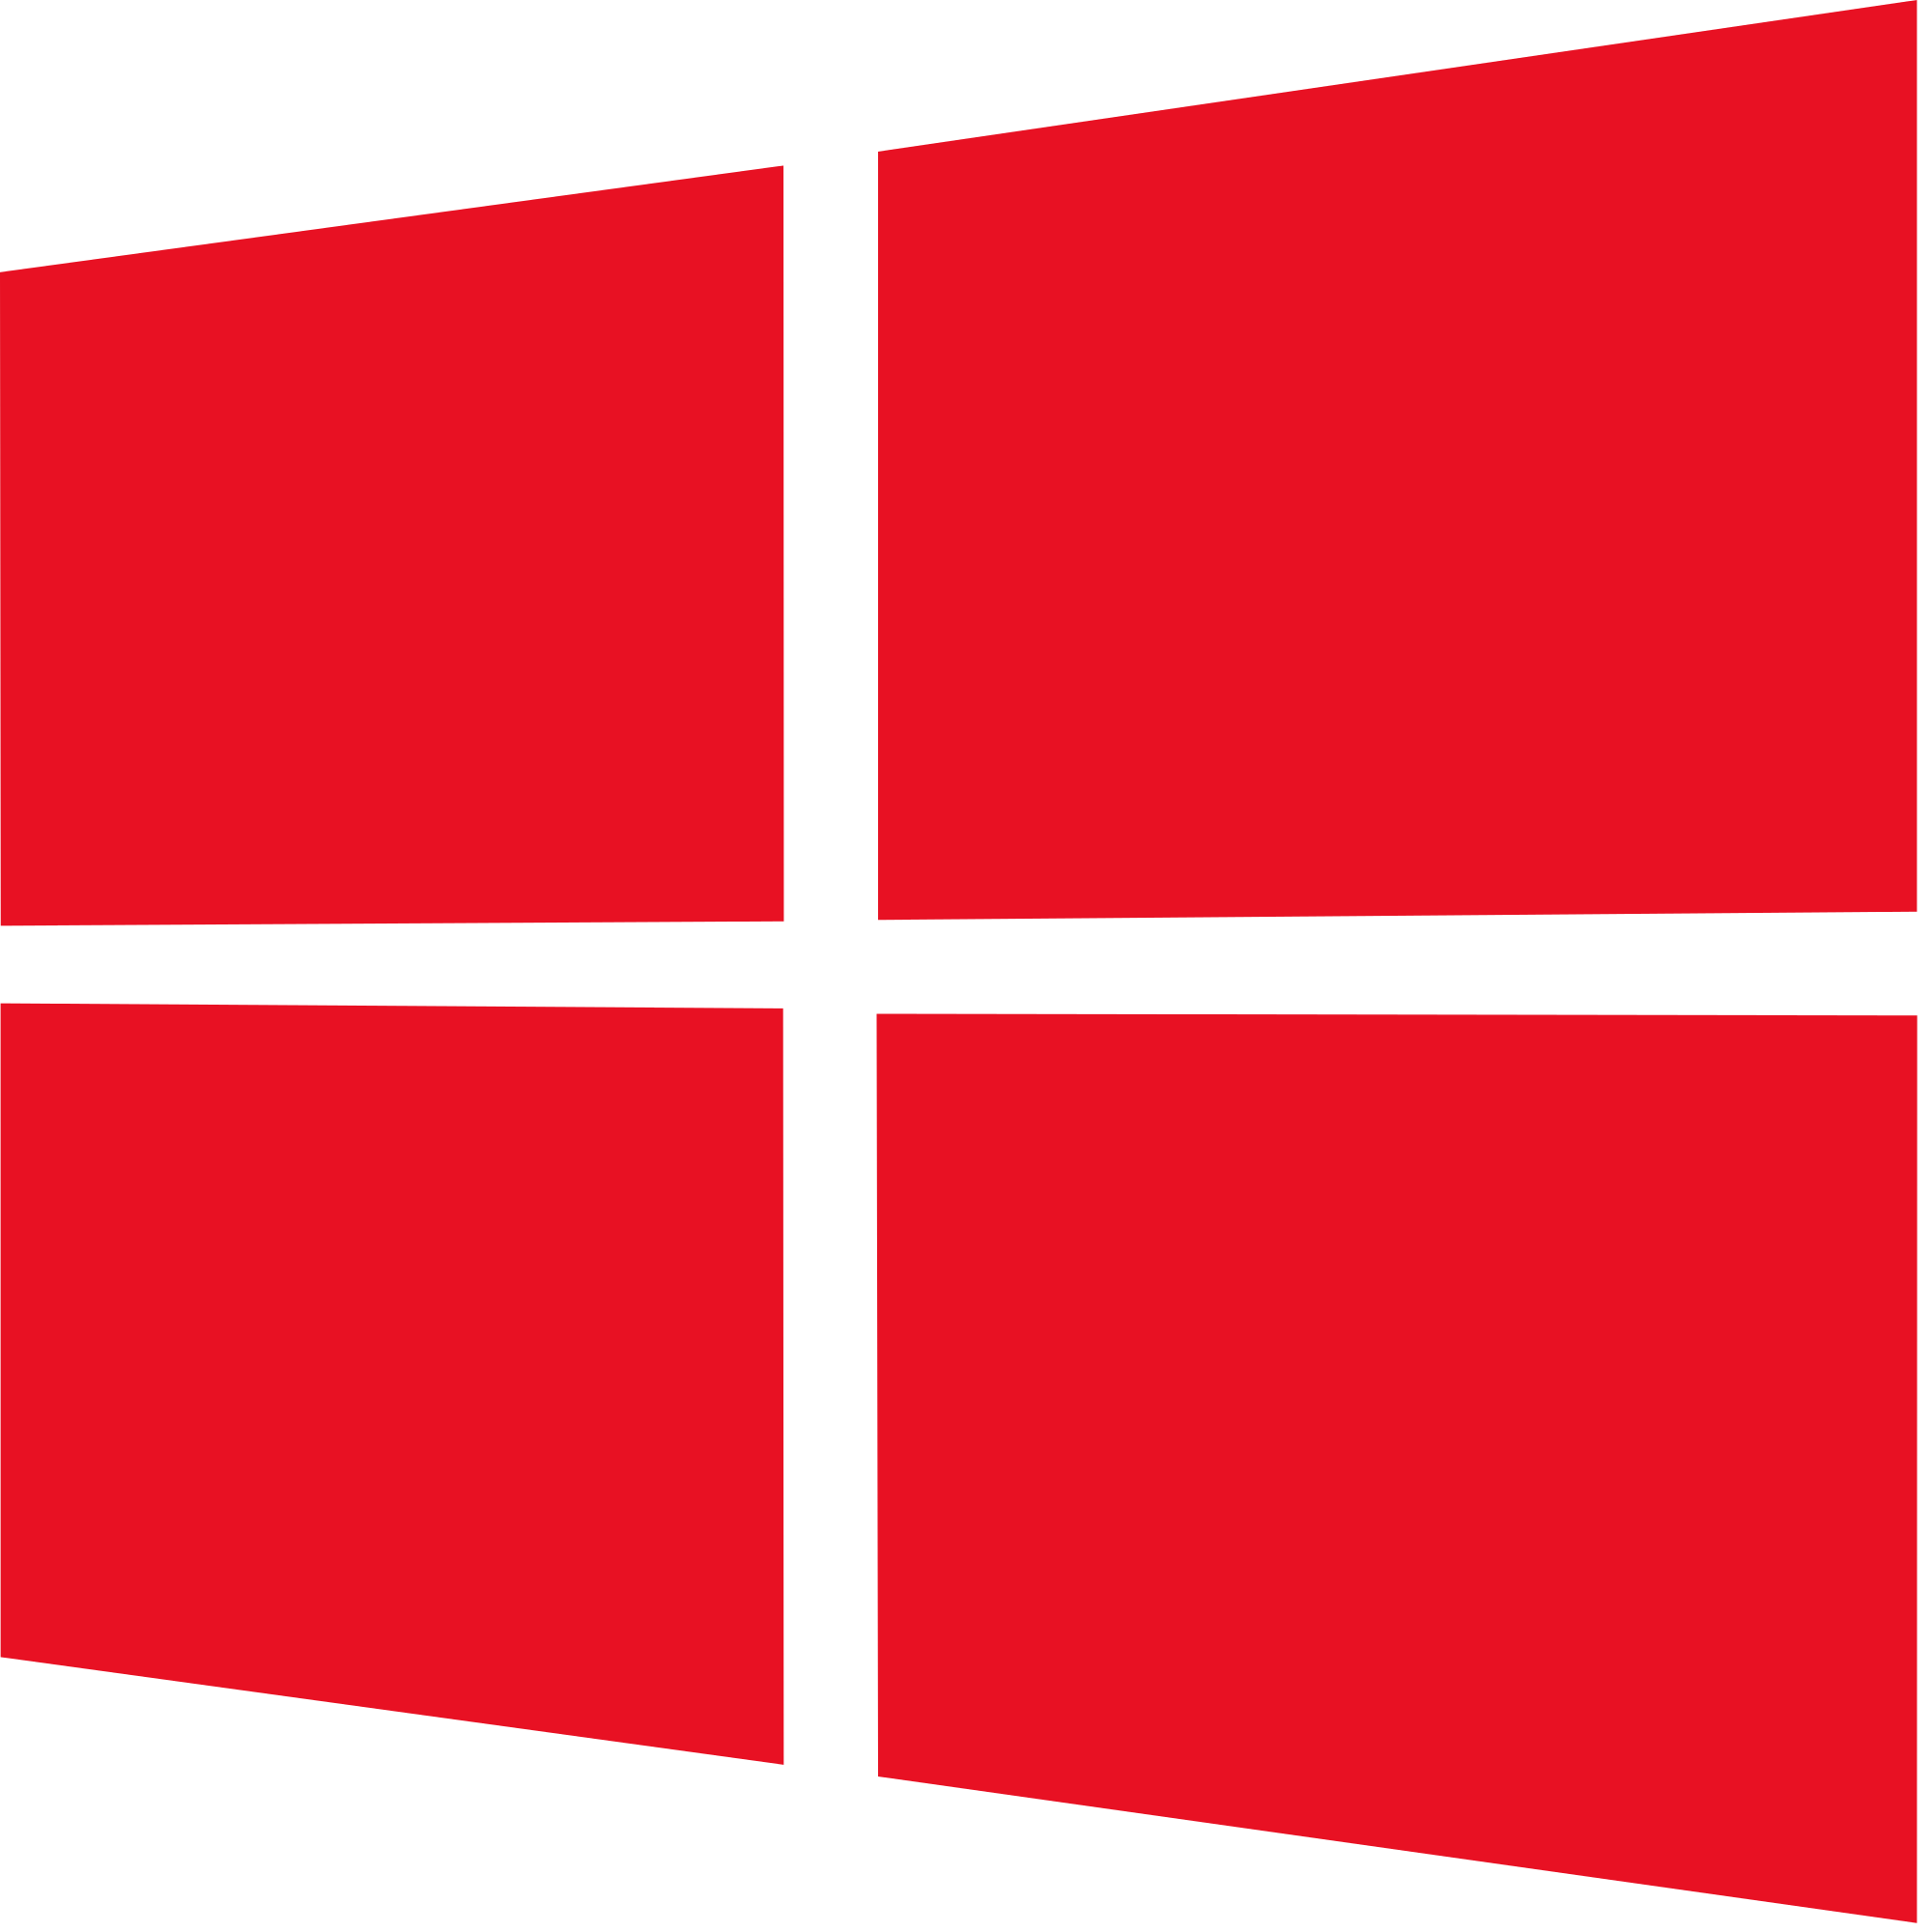 Windows Logo - File:Windows logo - 2012 (red).svg - Wikimedia Commons